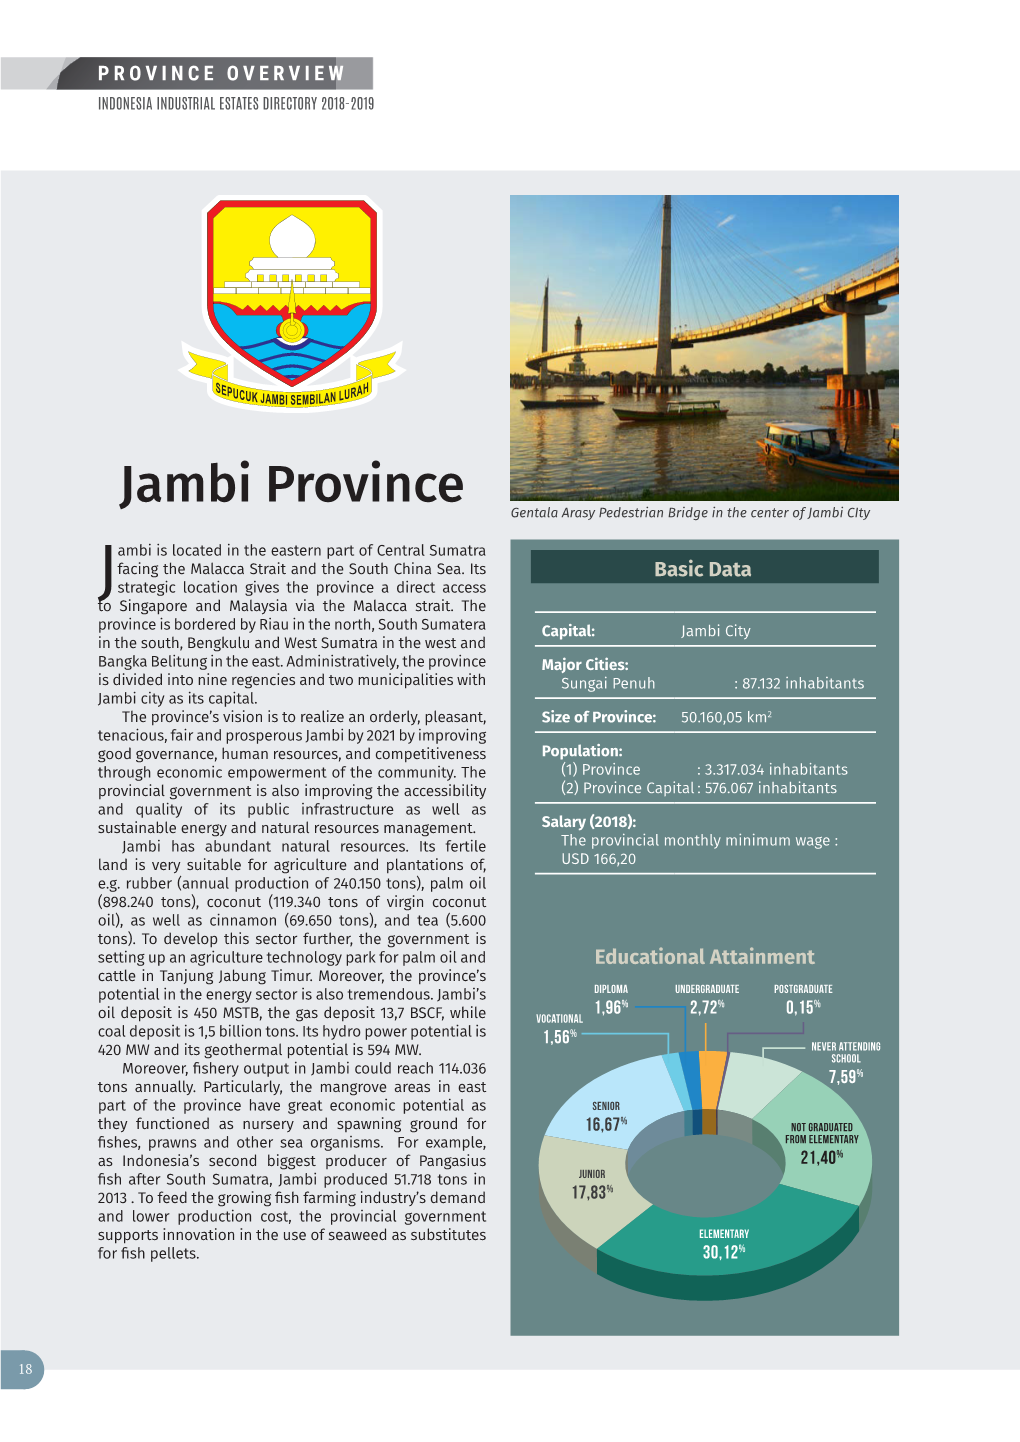 Jambi Province Gentala Arasy Pedestrian Bridge in the Center of Jambi City